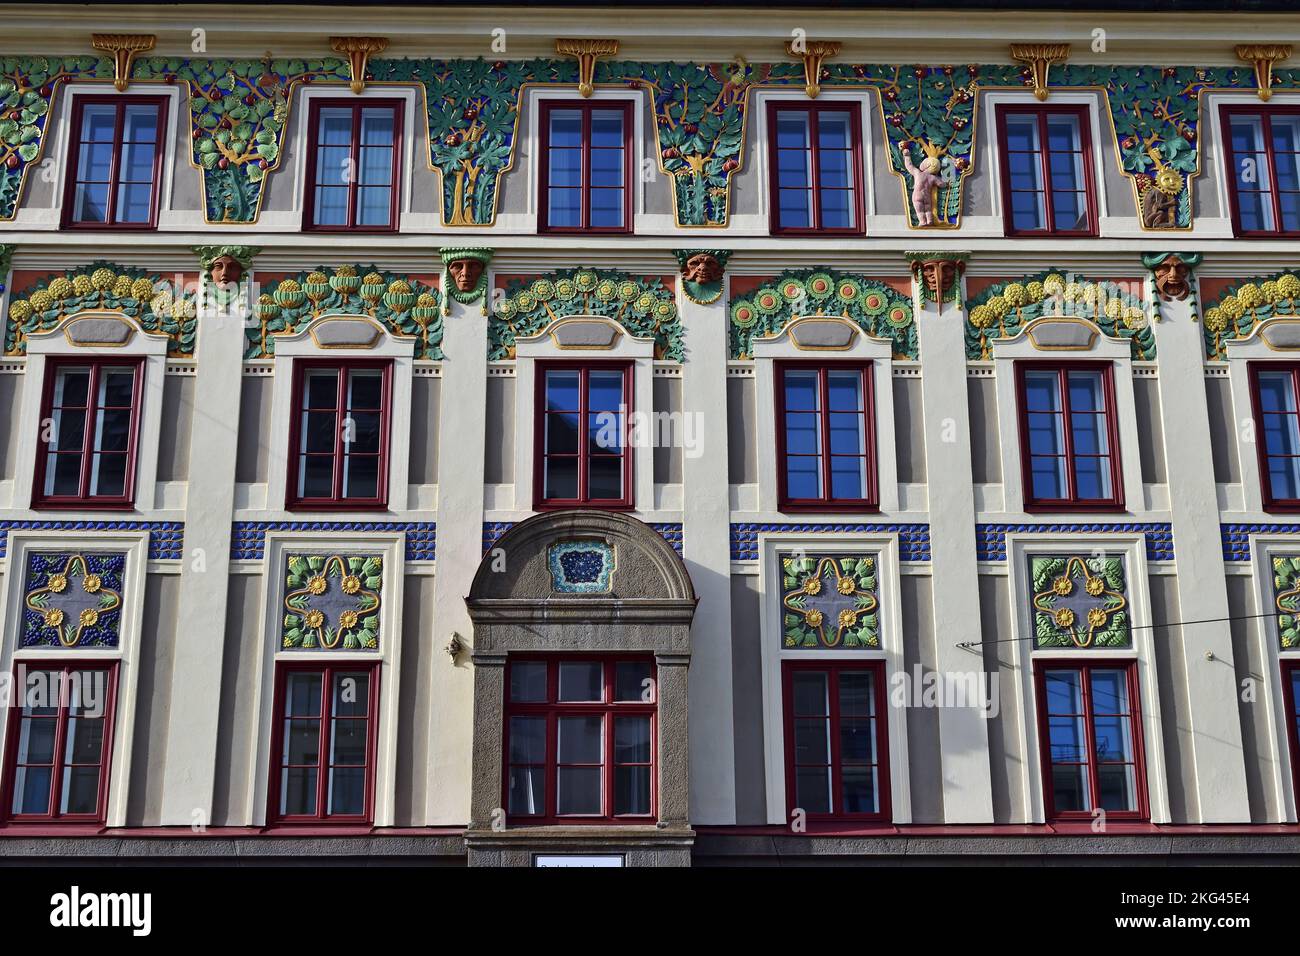 Winklerhouse, Jugendstilarchitektur in Innsbruck, Österreich Stockfoto